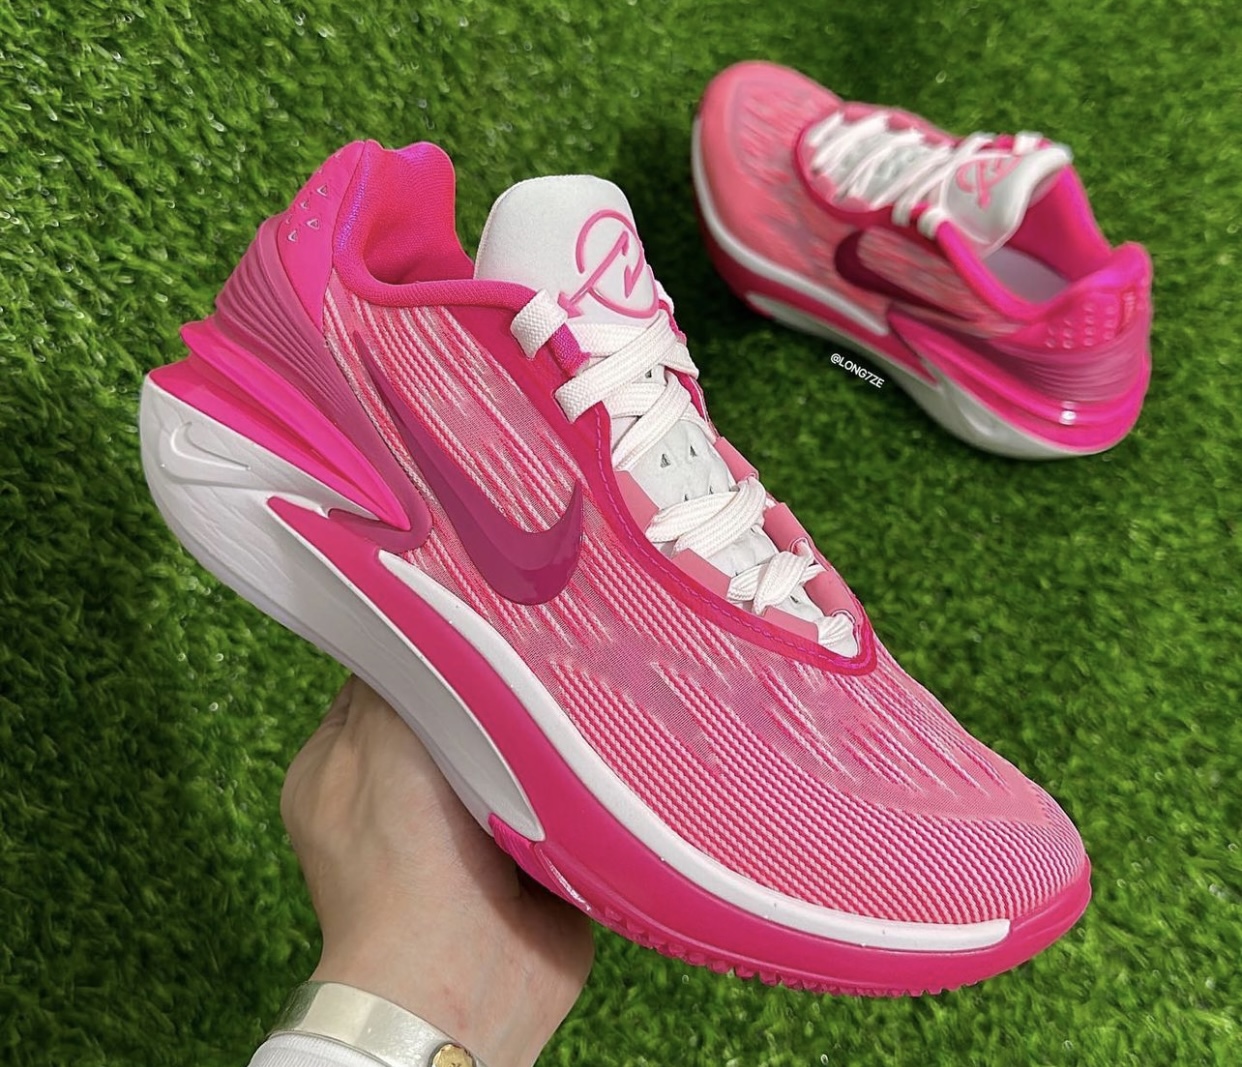 Nike gt cut 2 ナイキ GT CUT 2 hyper pink